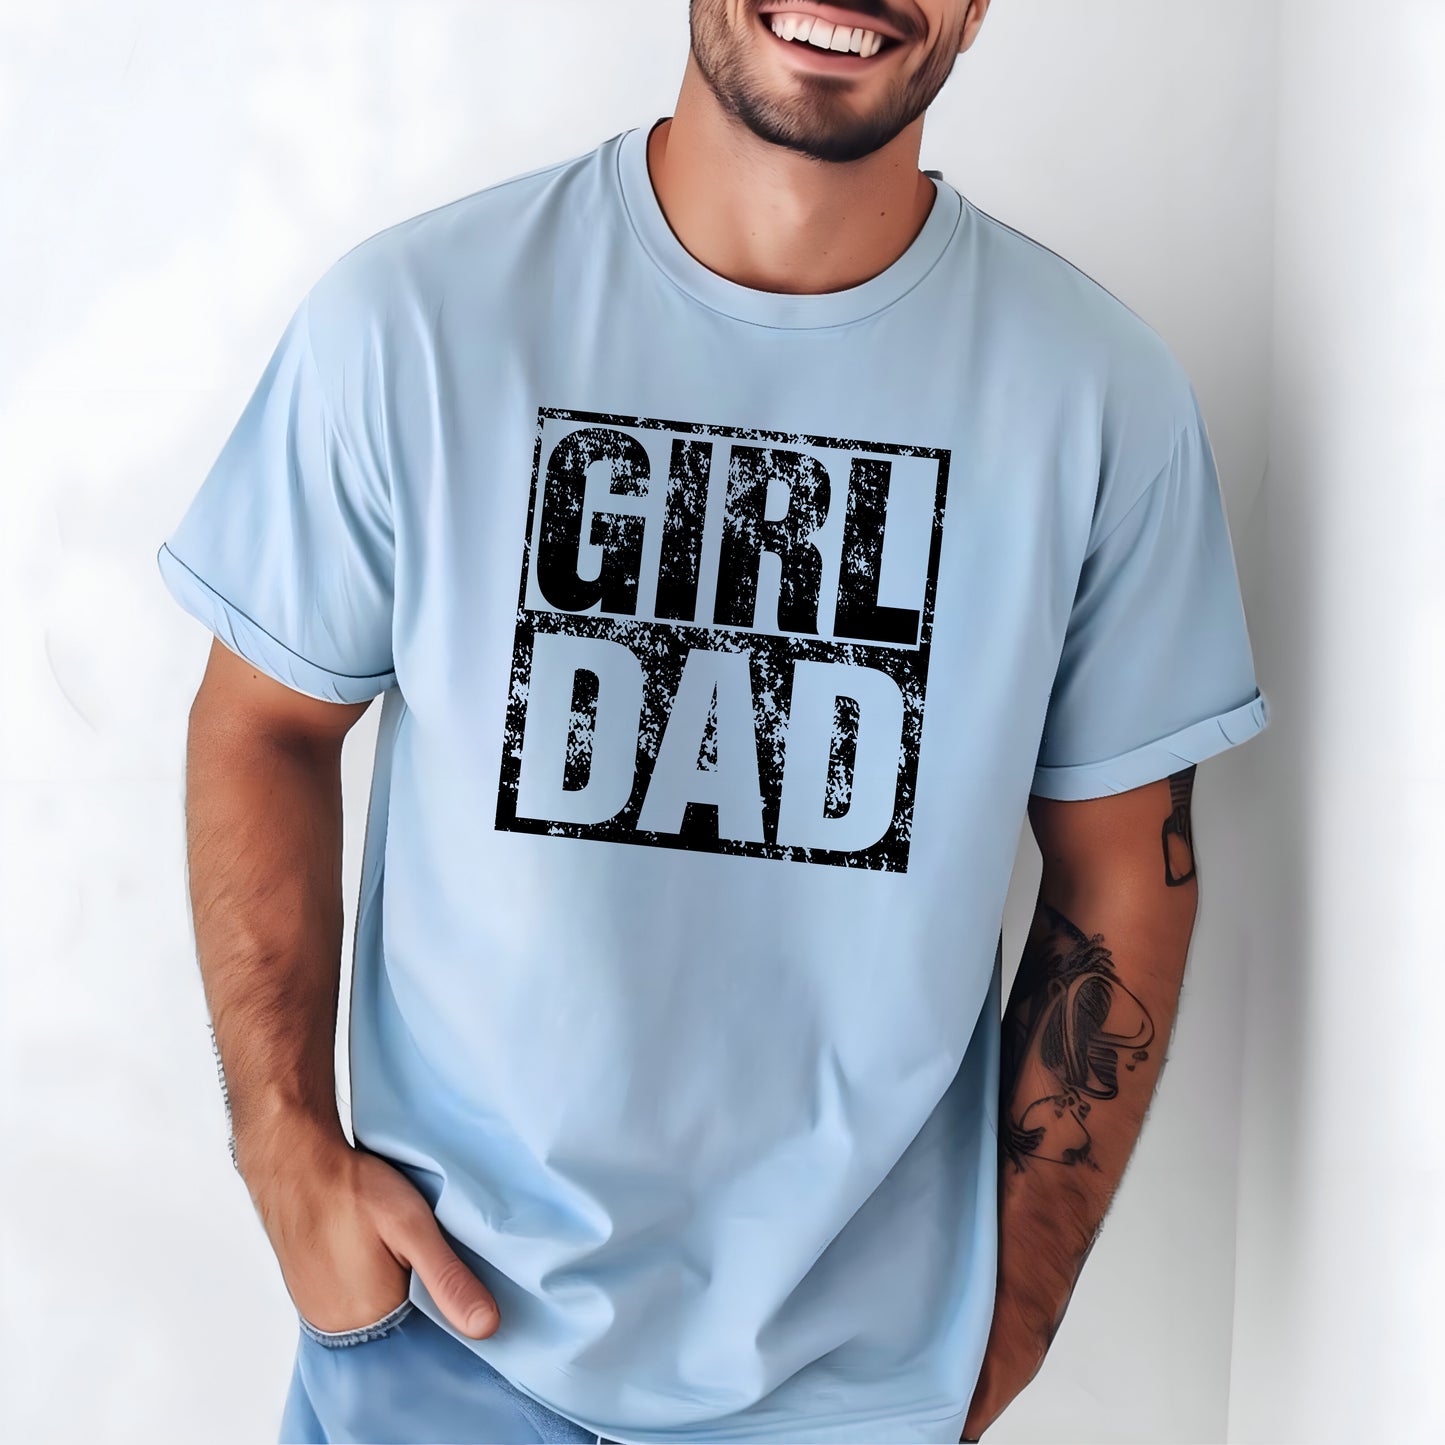 Girl Dad T-Shirt or Crew Sweatshirt